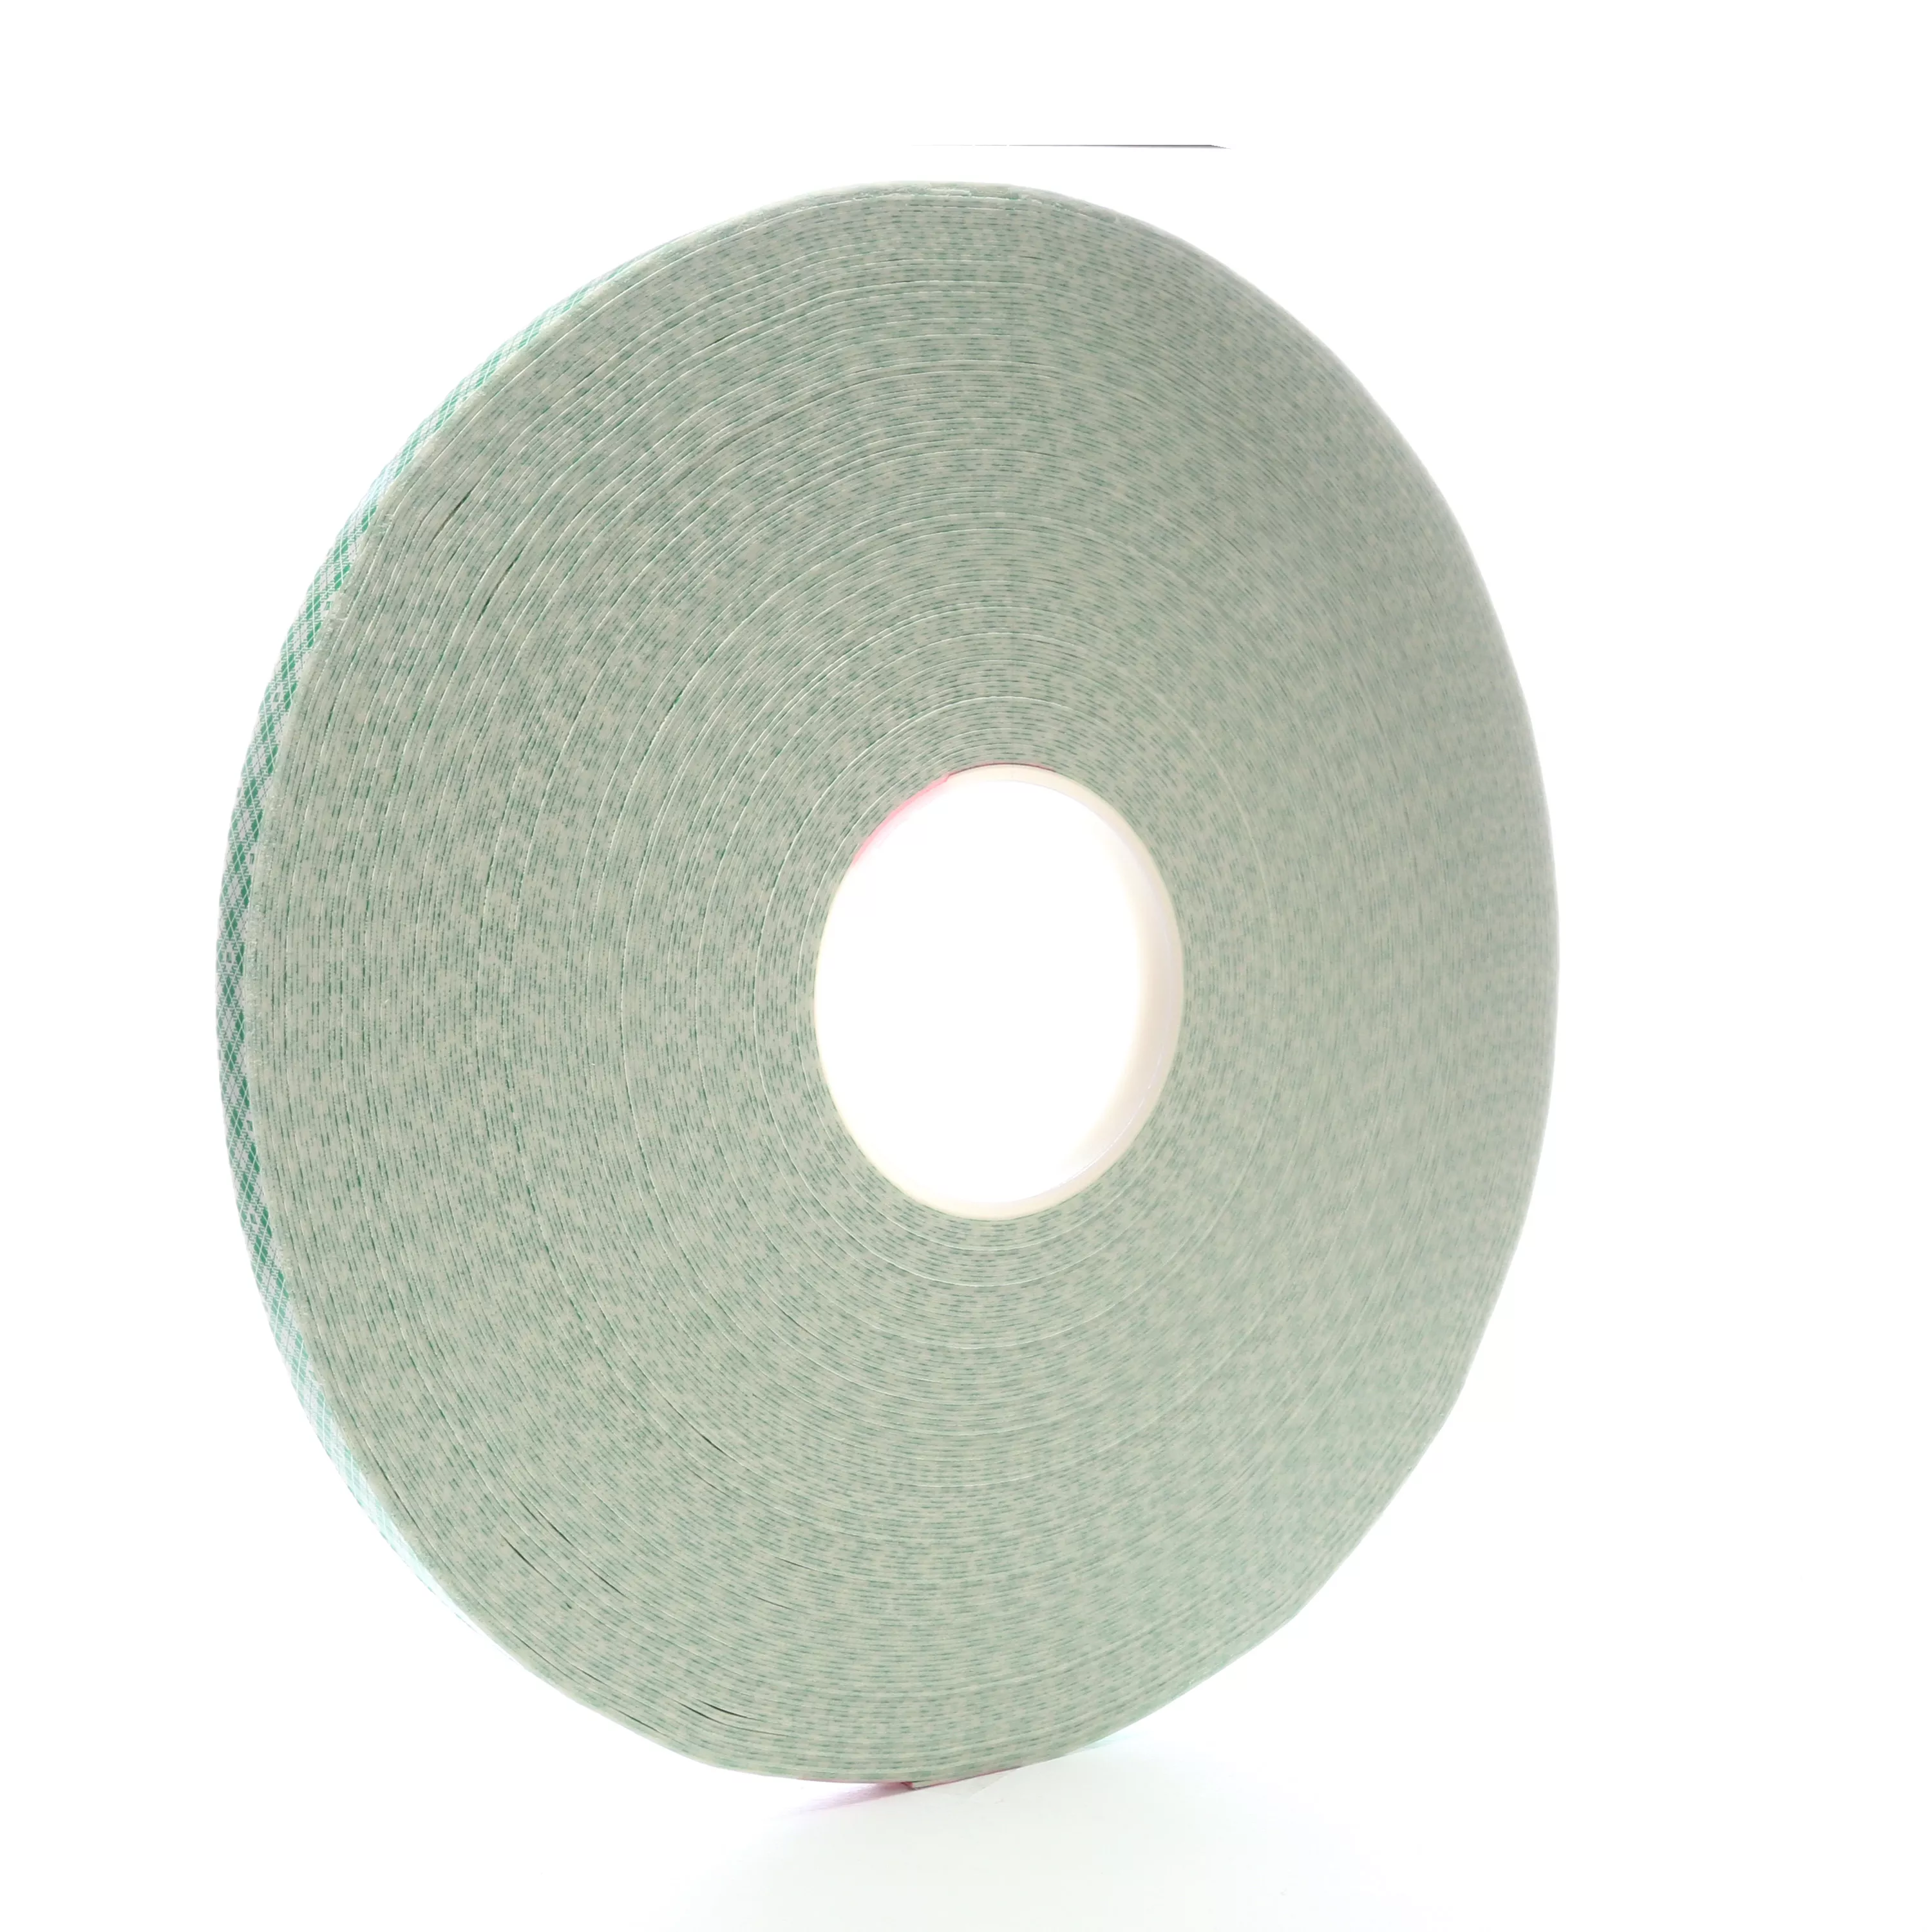 Product Number 4032 | 3M™ Double Coated Urethane Foam Tape 4032